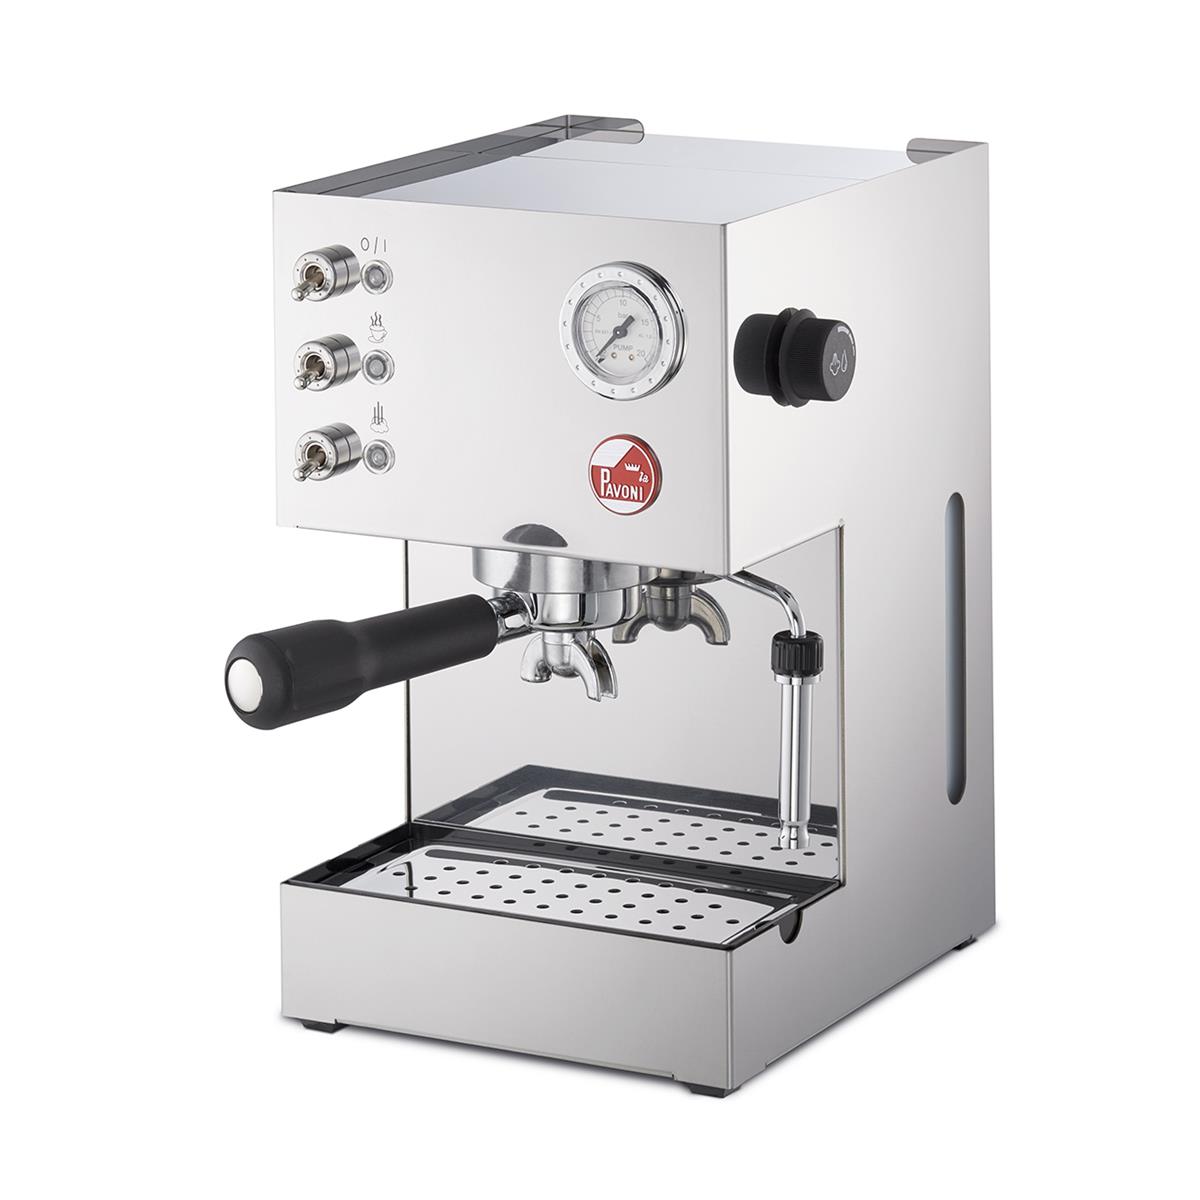 Cafetera espresso - BAR 3L - La Pavoni - profesional / manual / de 3 grupos